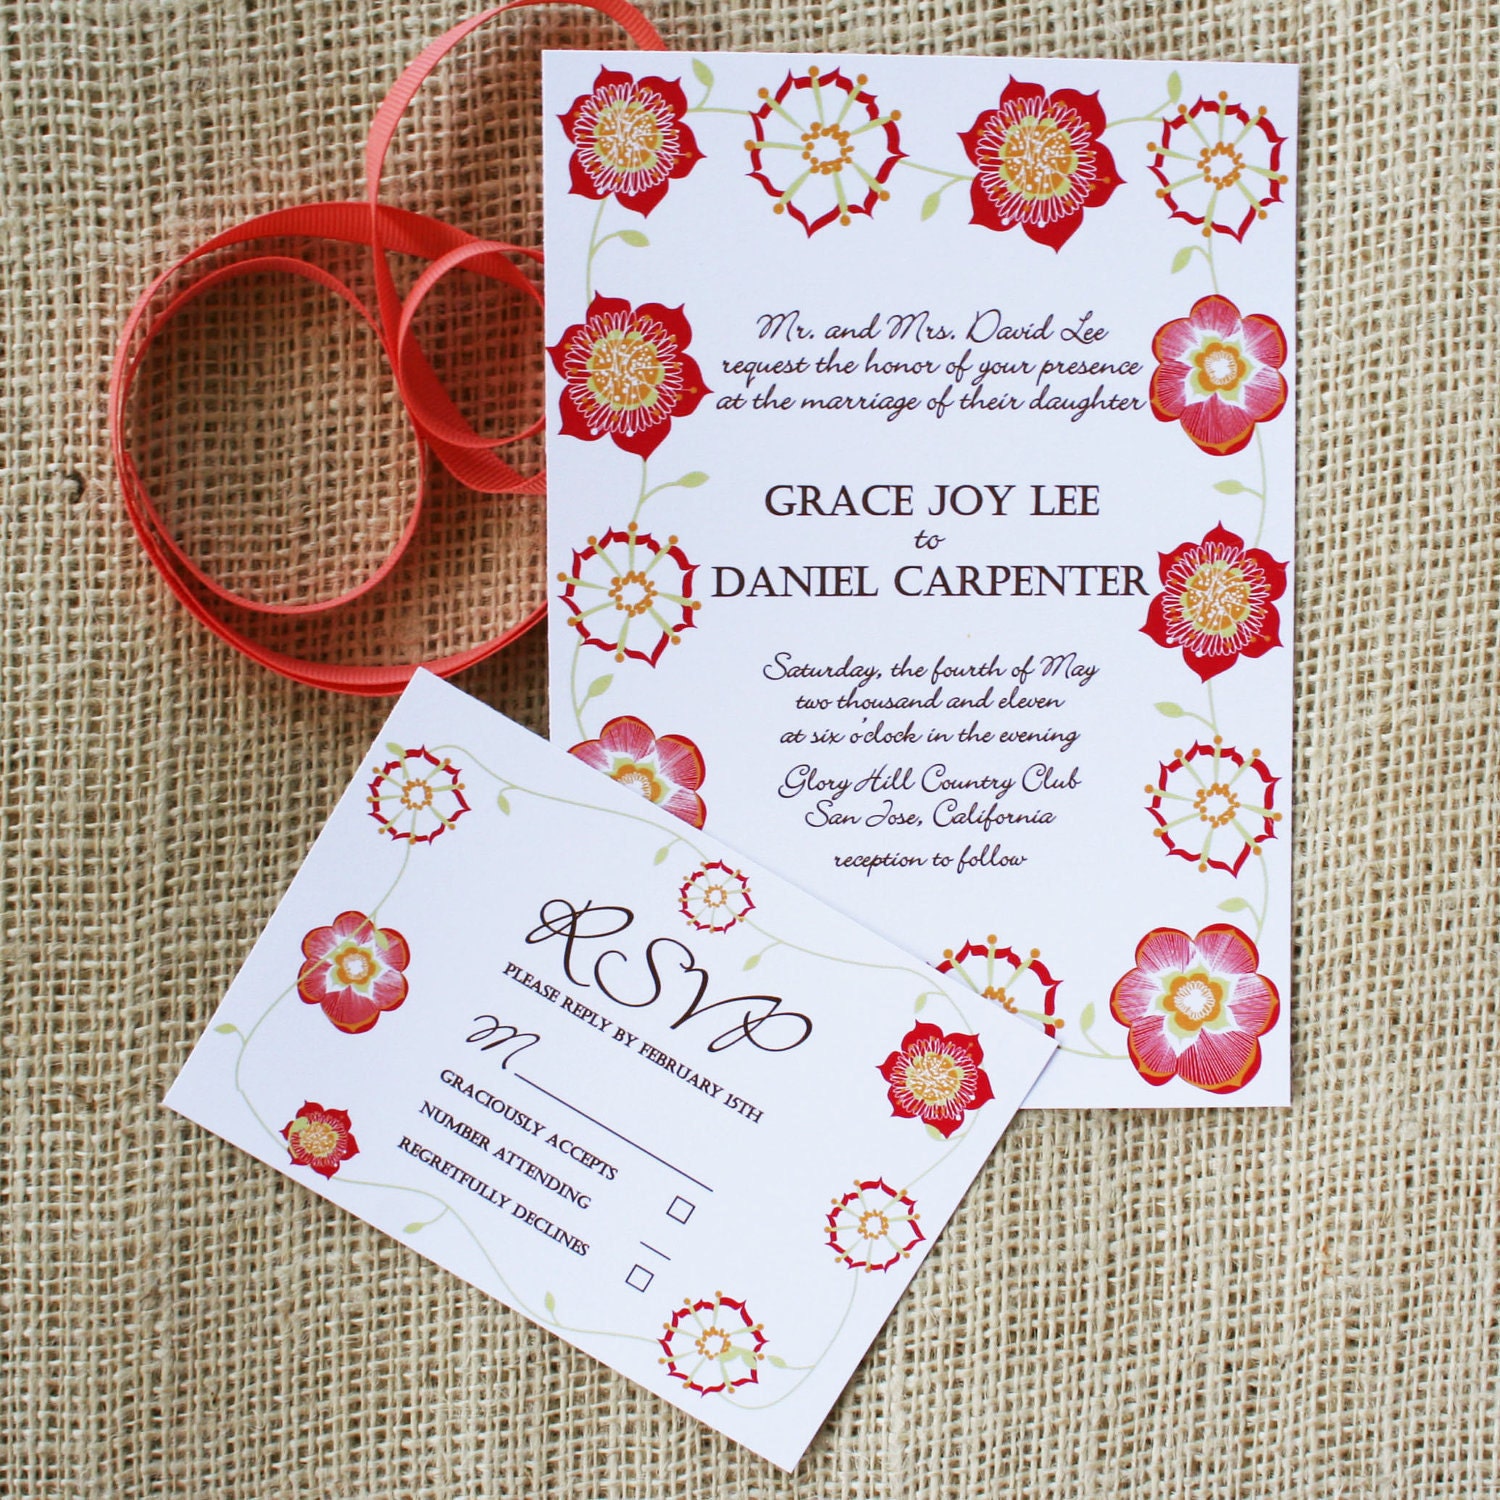 PAKISTANI ENGLISH wedding invitation cards TEMPLATES